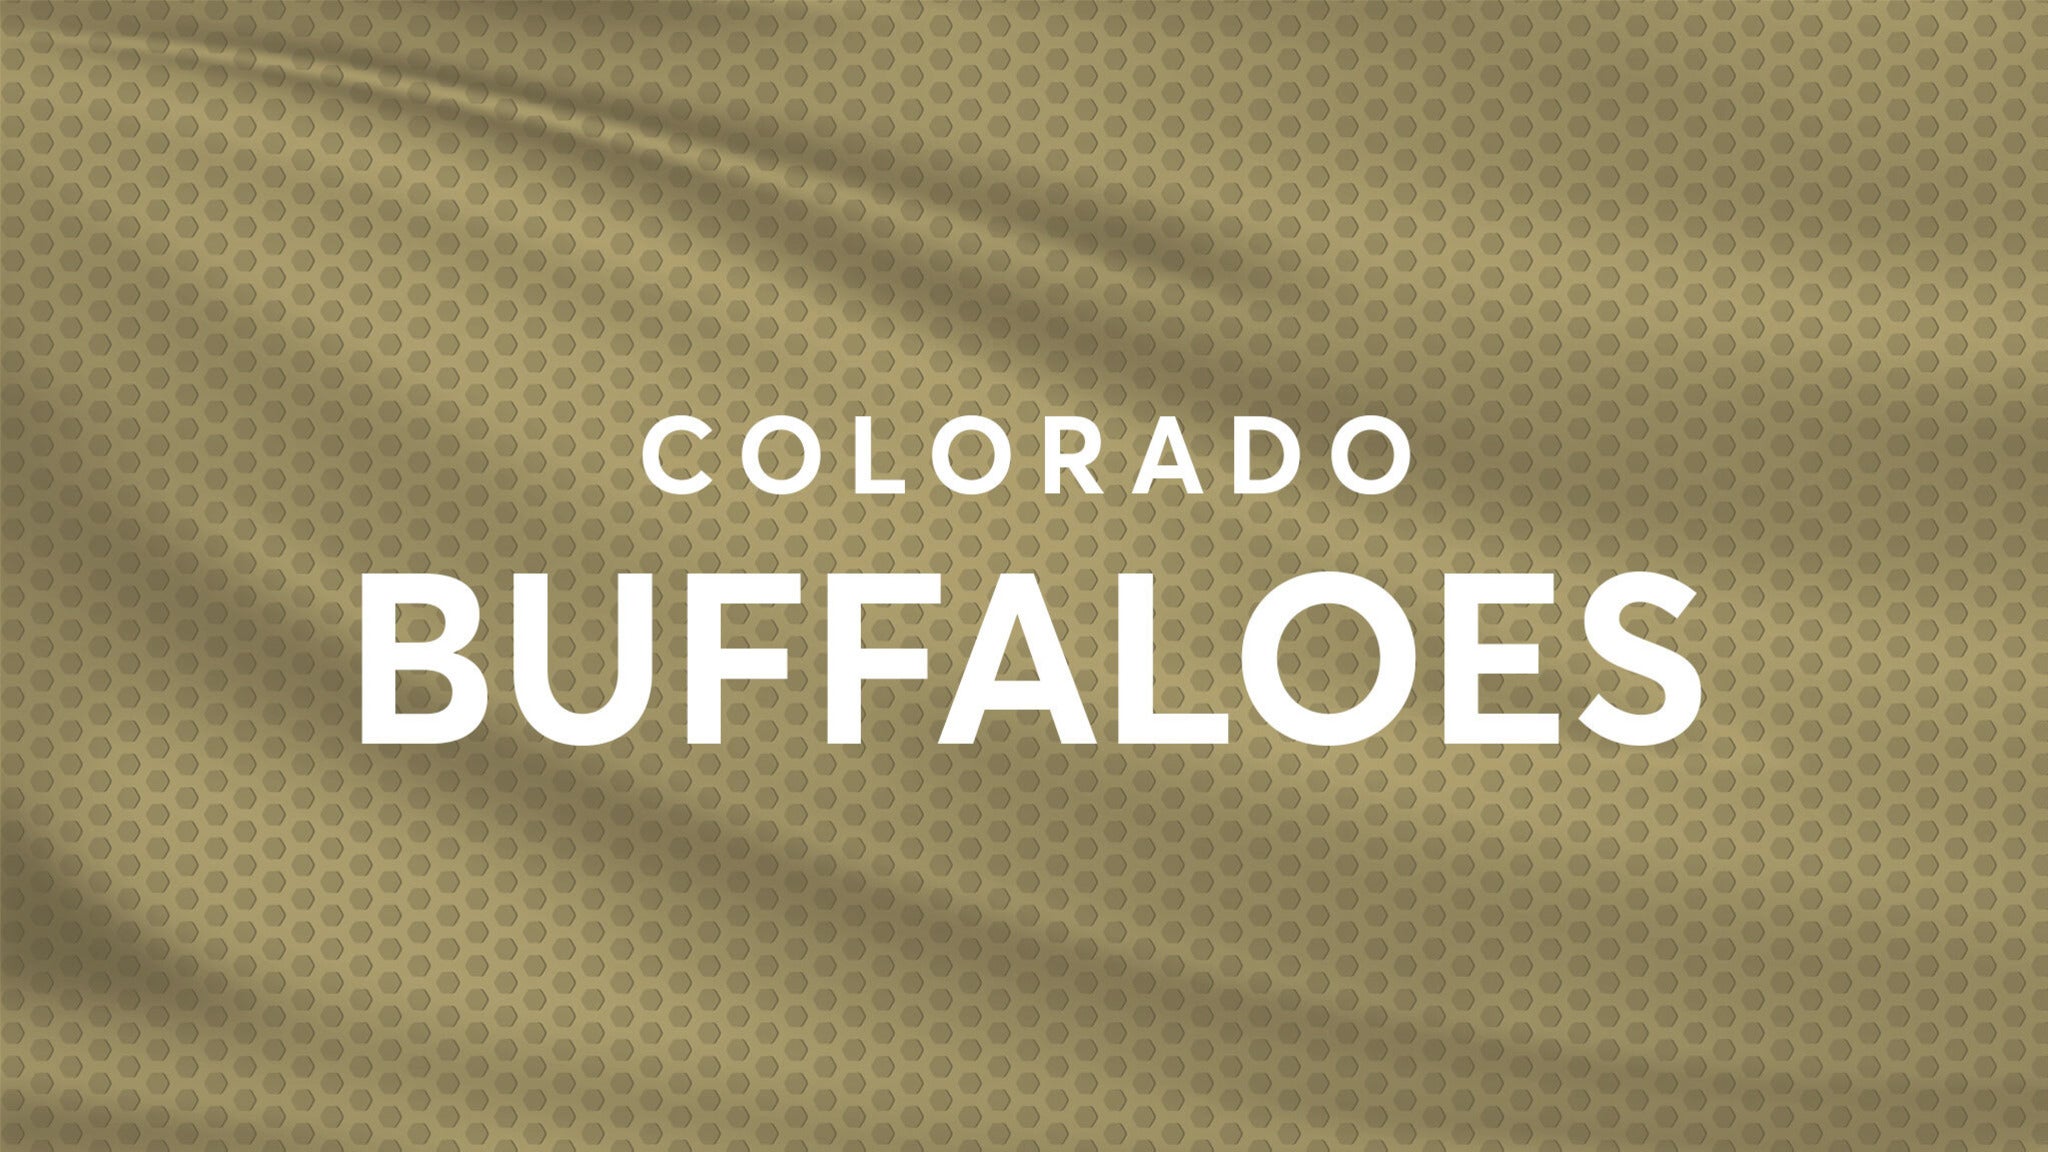 Colorado Buffaloes Football vs. Oregon Ducks Football